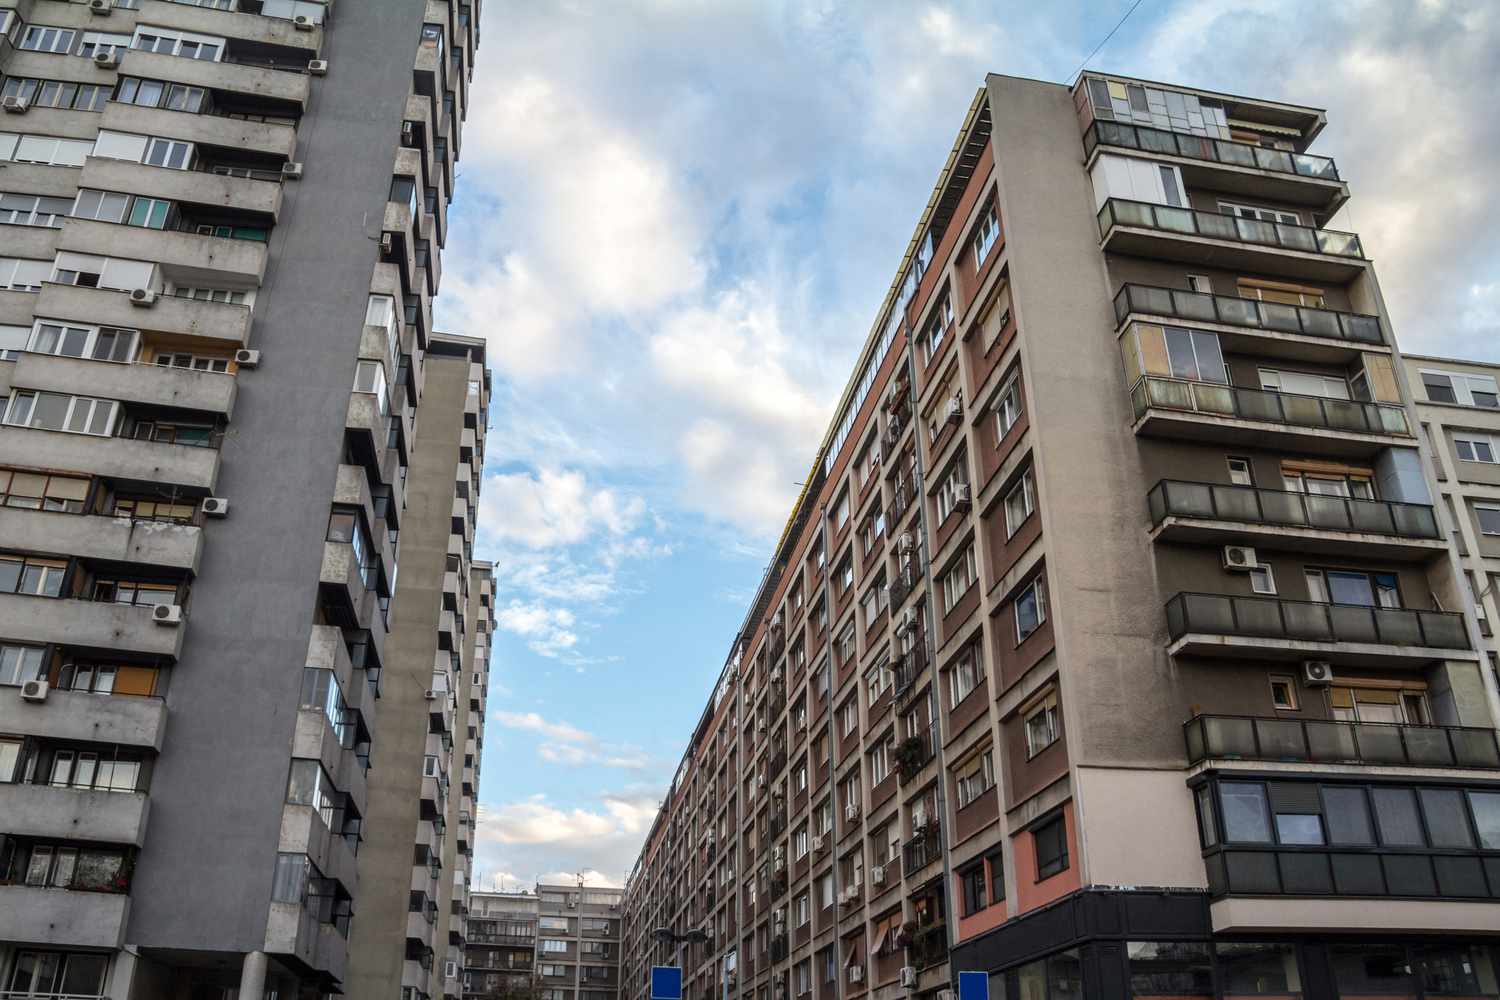 Logement communiste de style brutaliste à Belgrade, Serbie